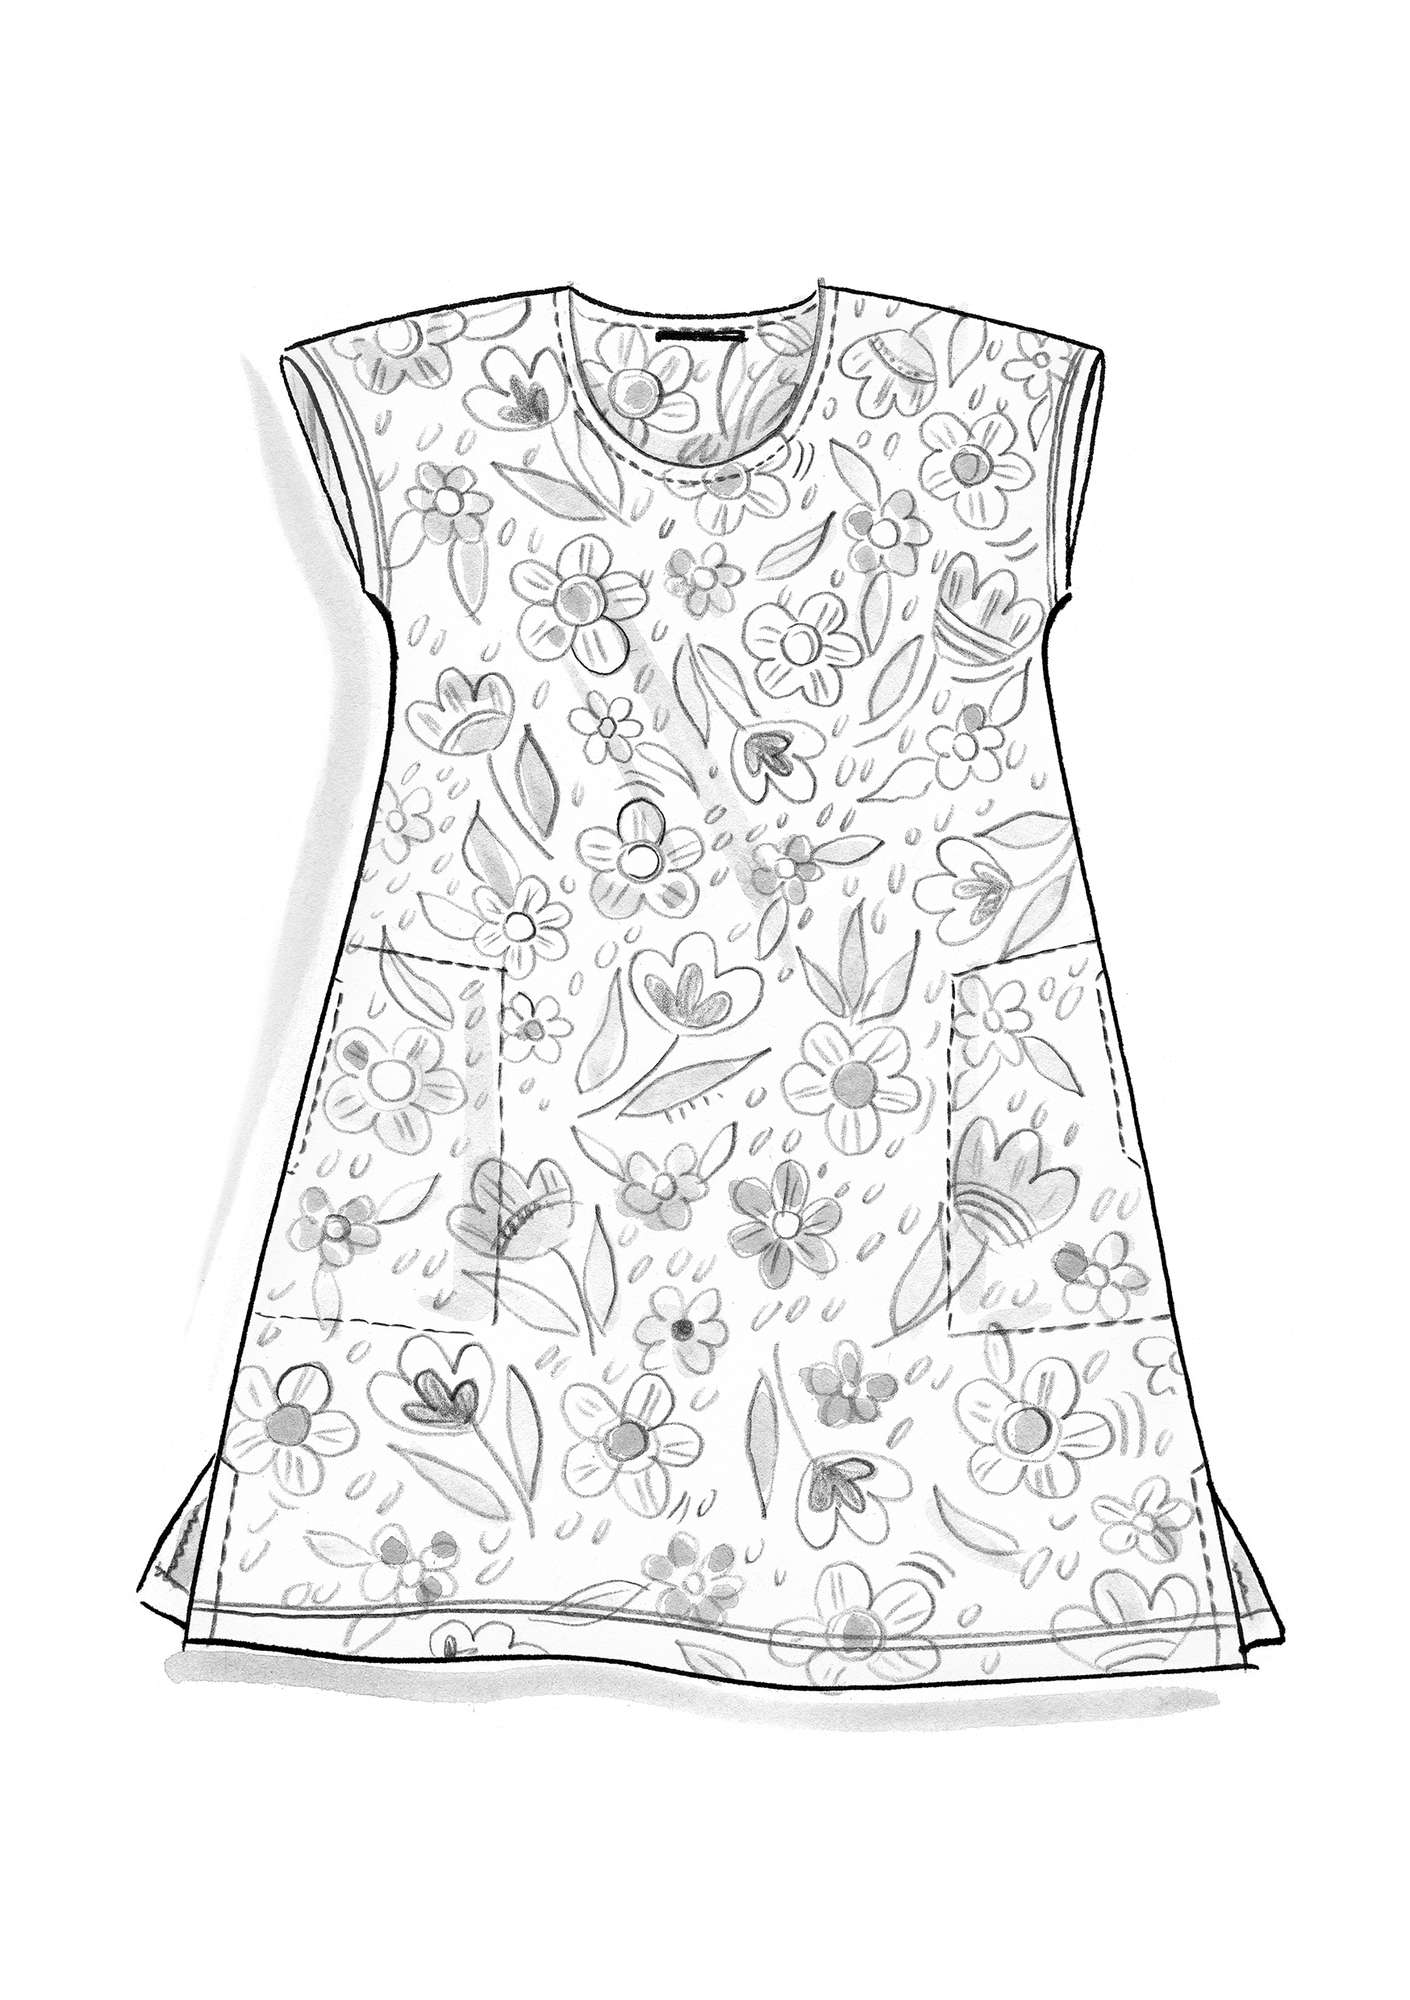 Tricot jurk  Lill  van biologisch katoen halfgebleekt